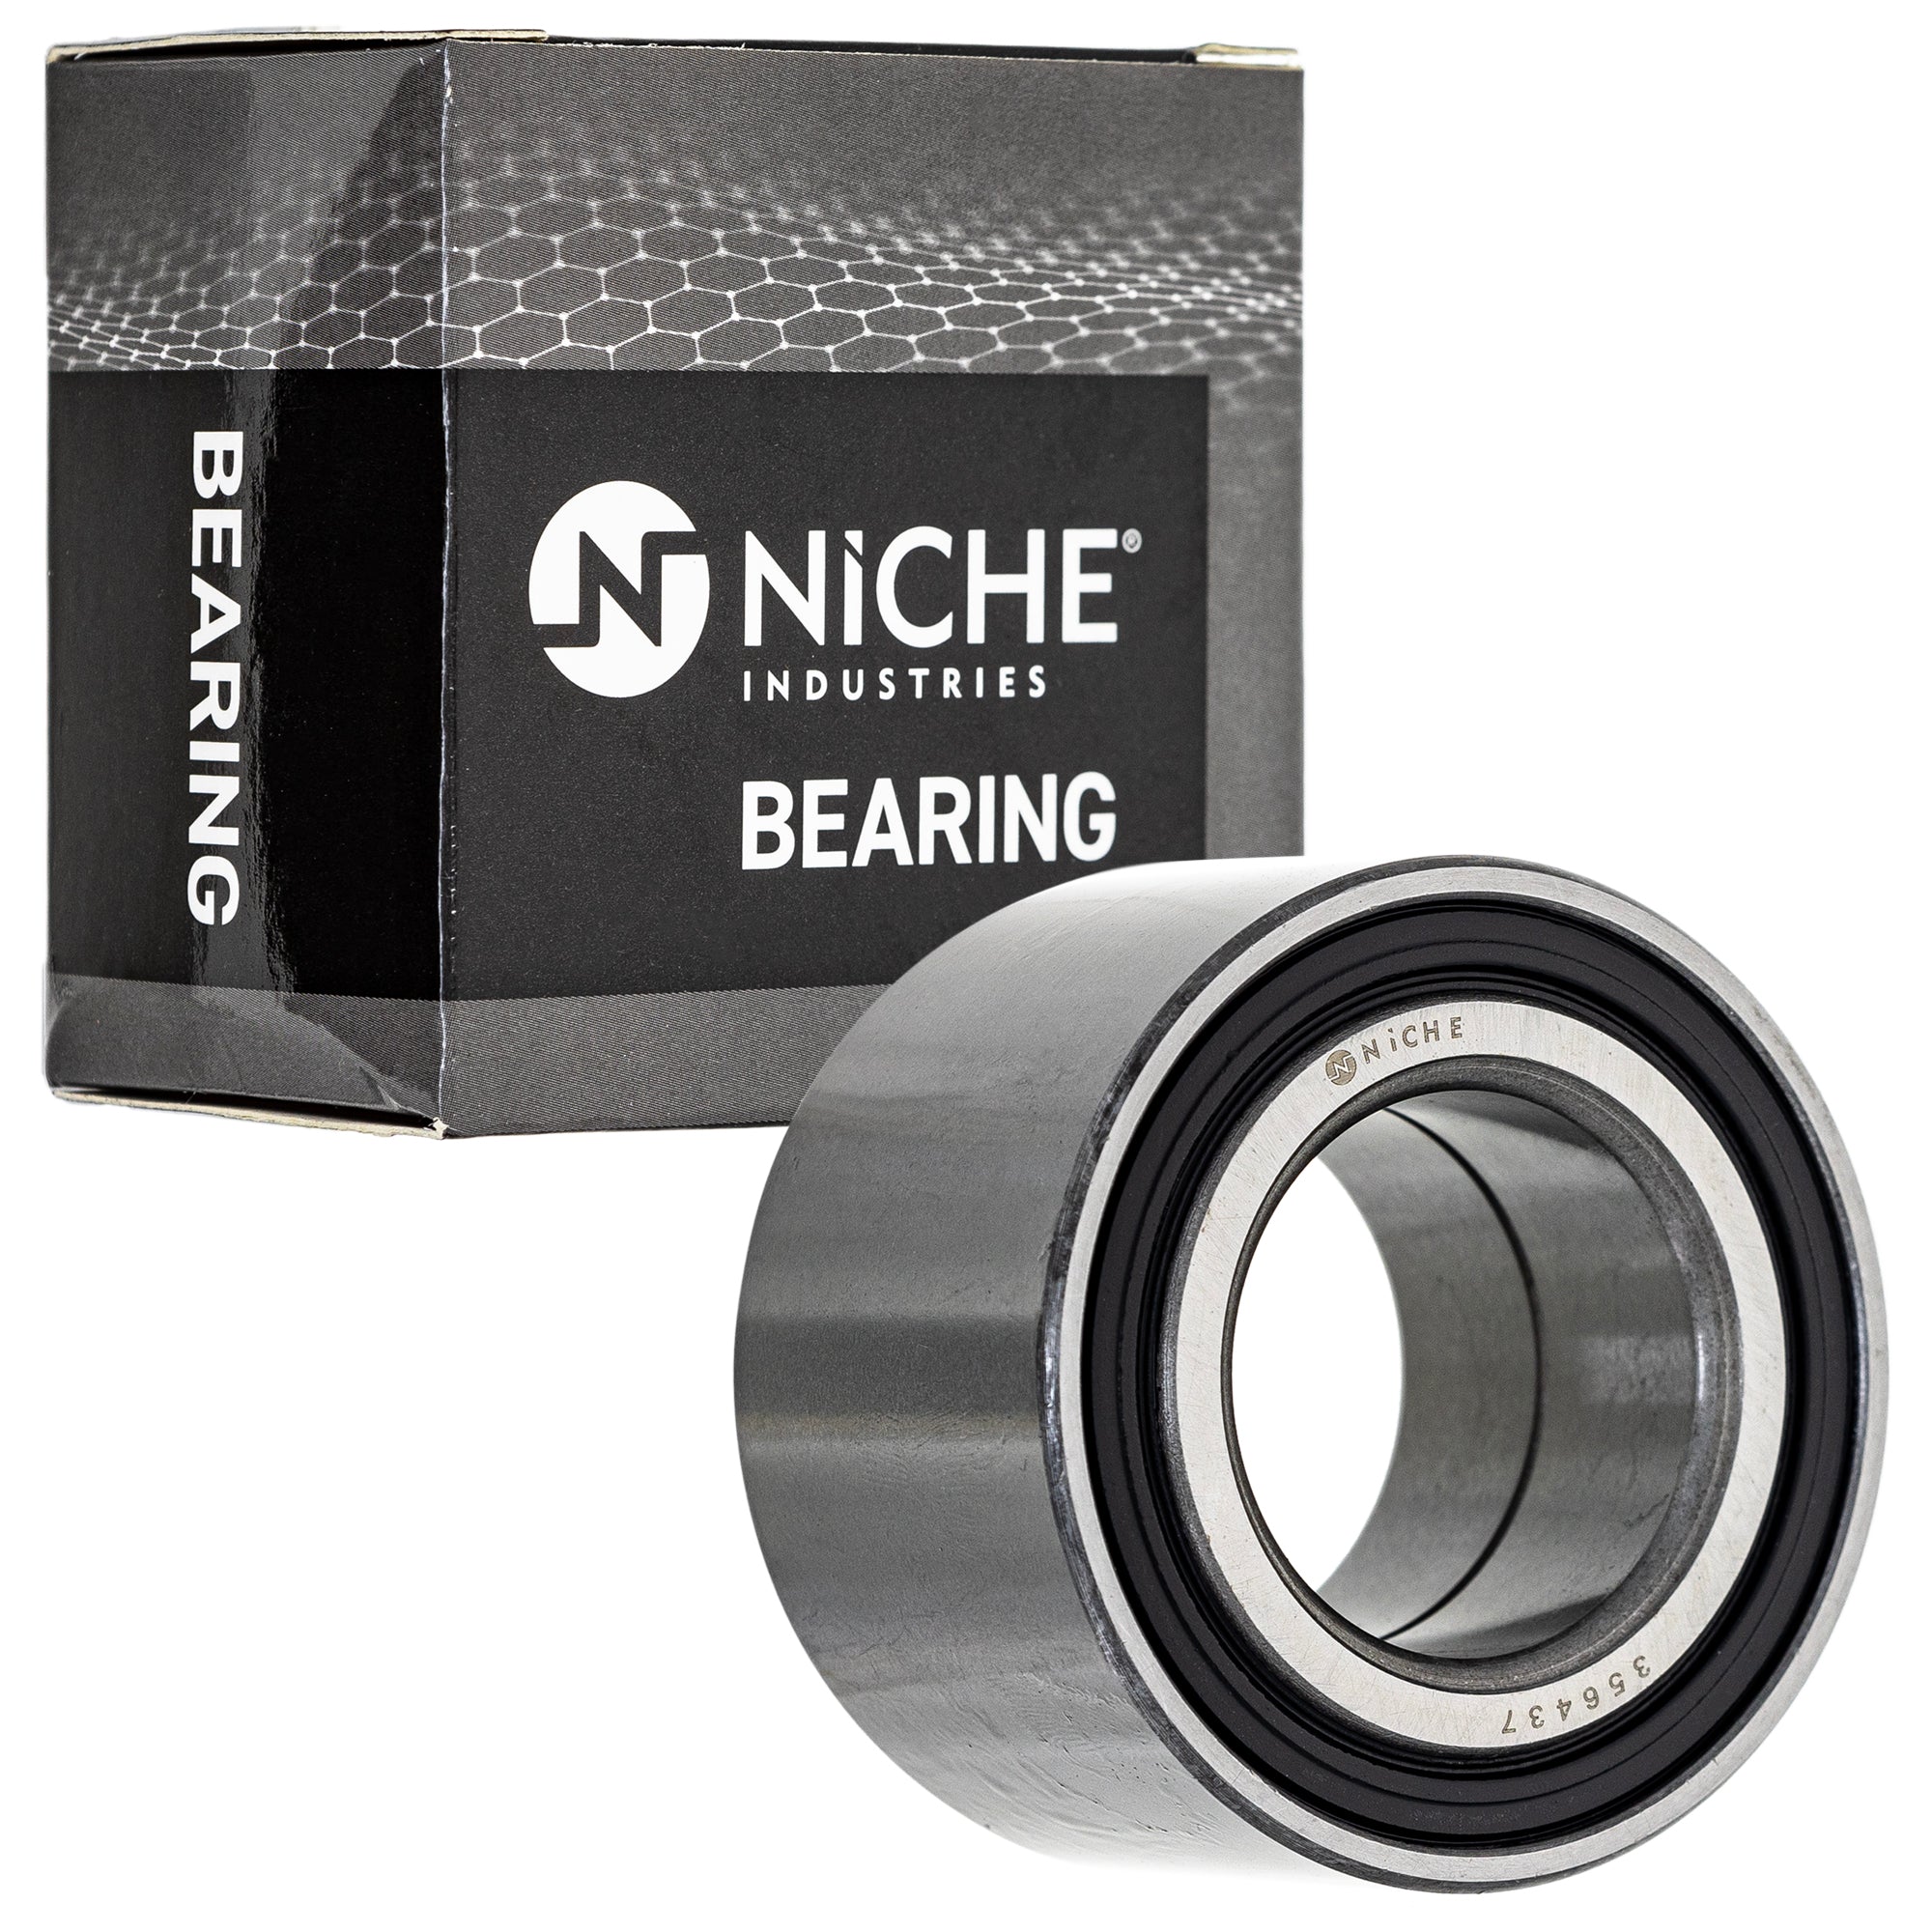 NICHE 519-CBB2283R Bearing 2-Pack for zOTHER GEM Trail-Blazer ST1300